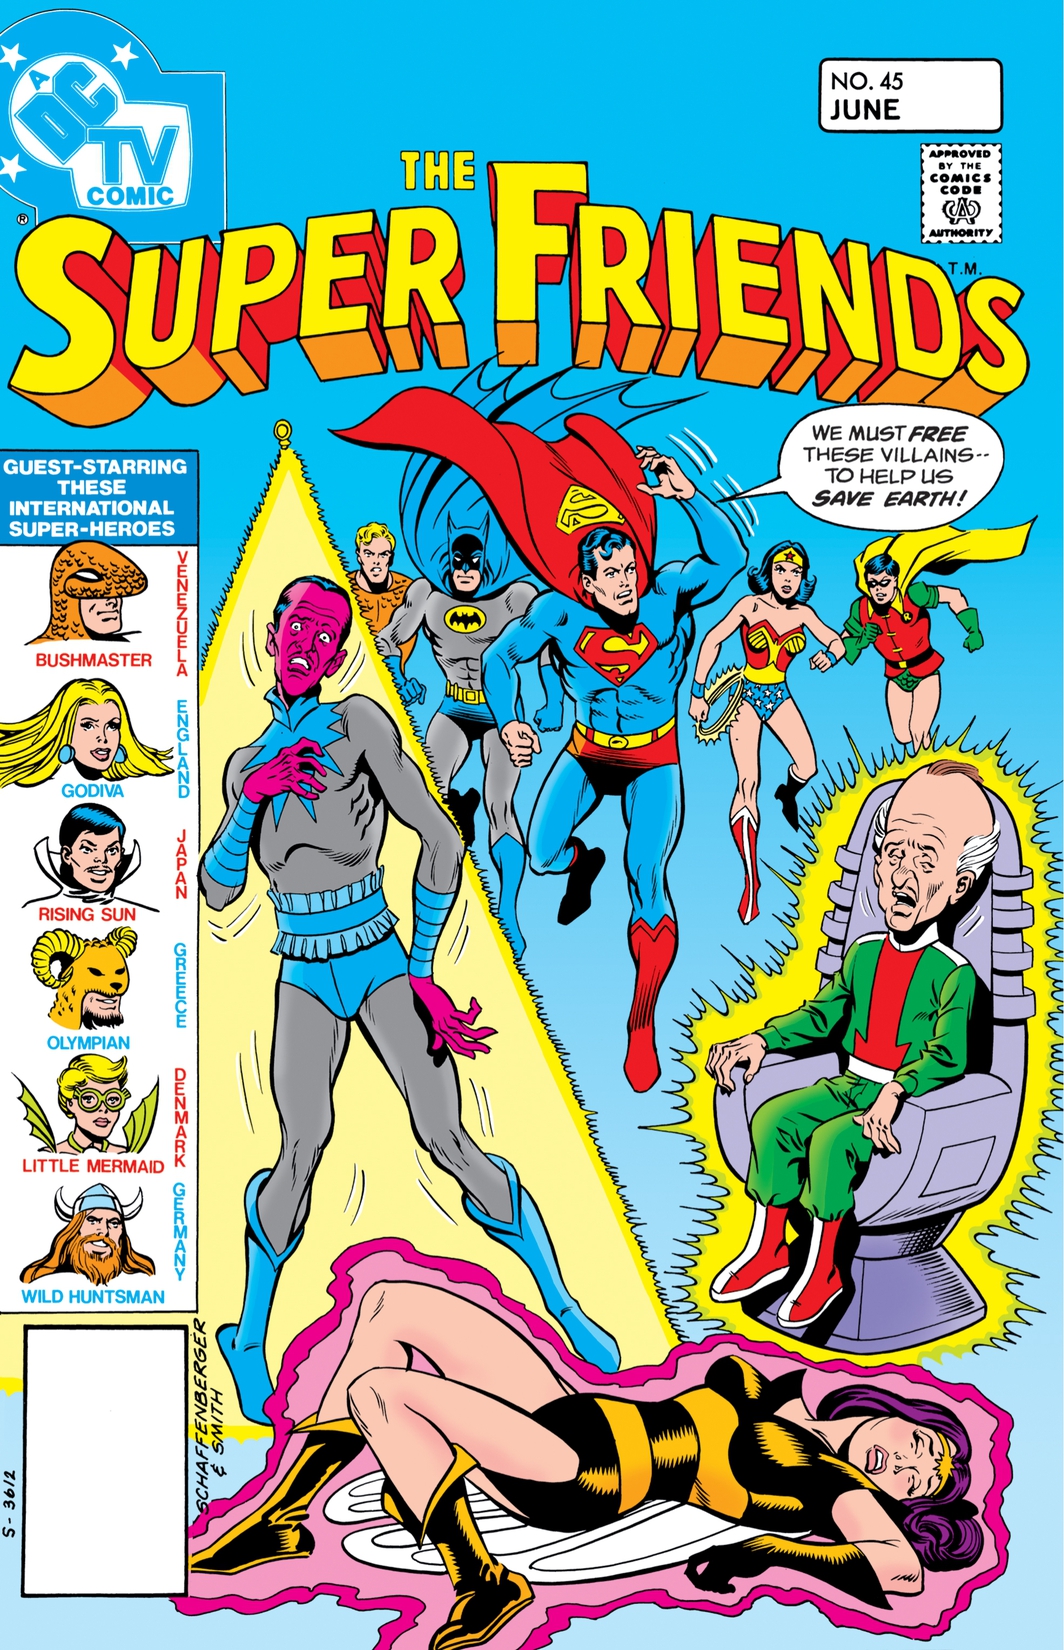 Super Friends (1976-1981) #45 preview images